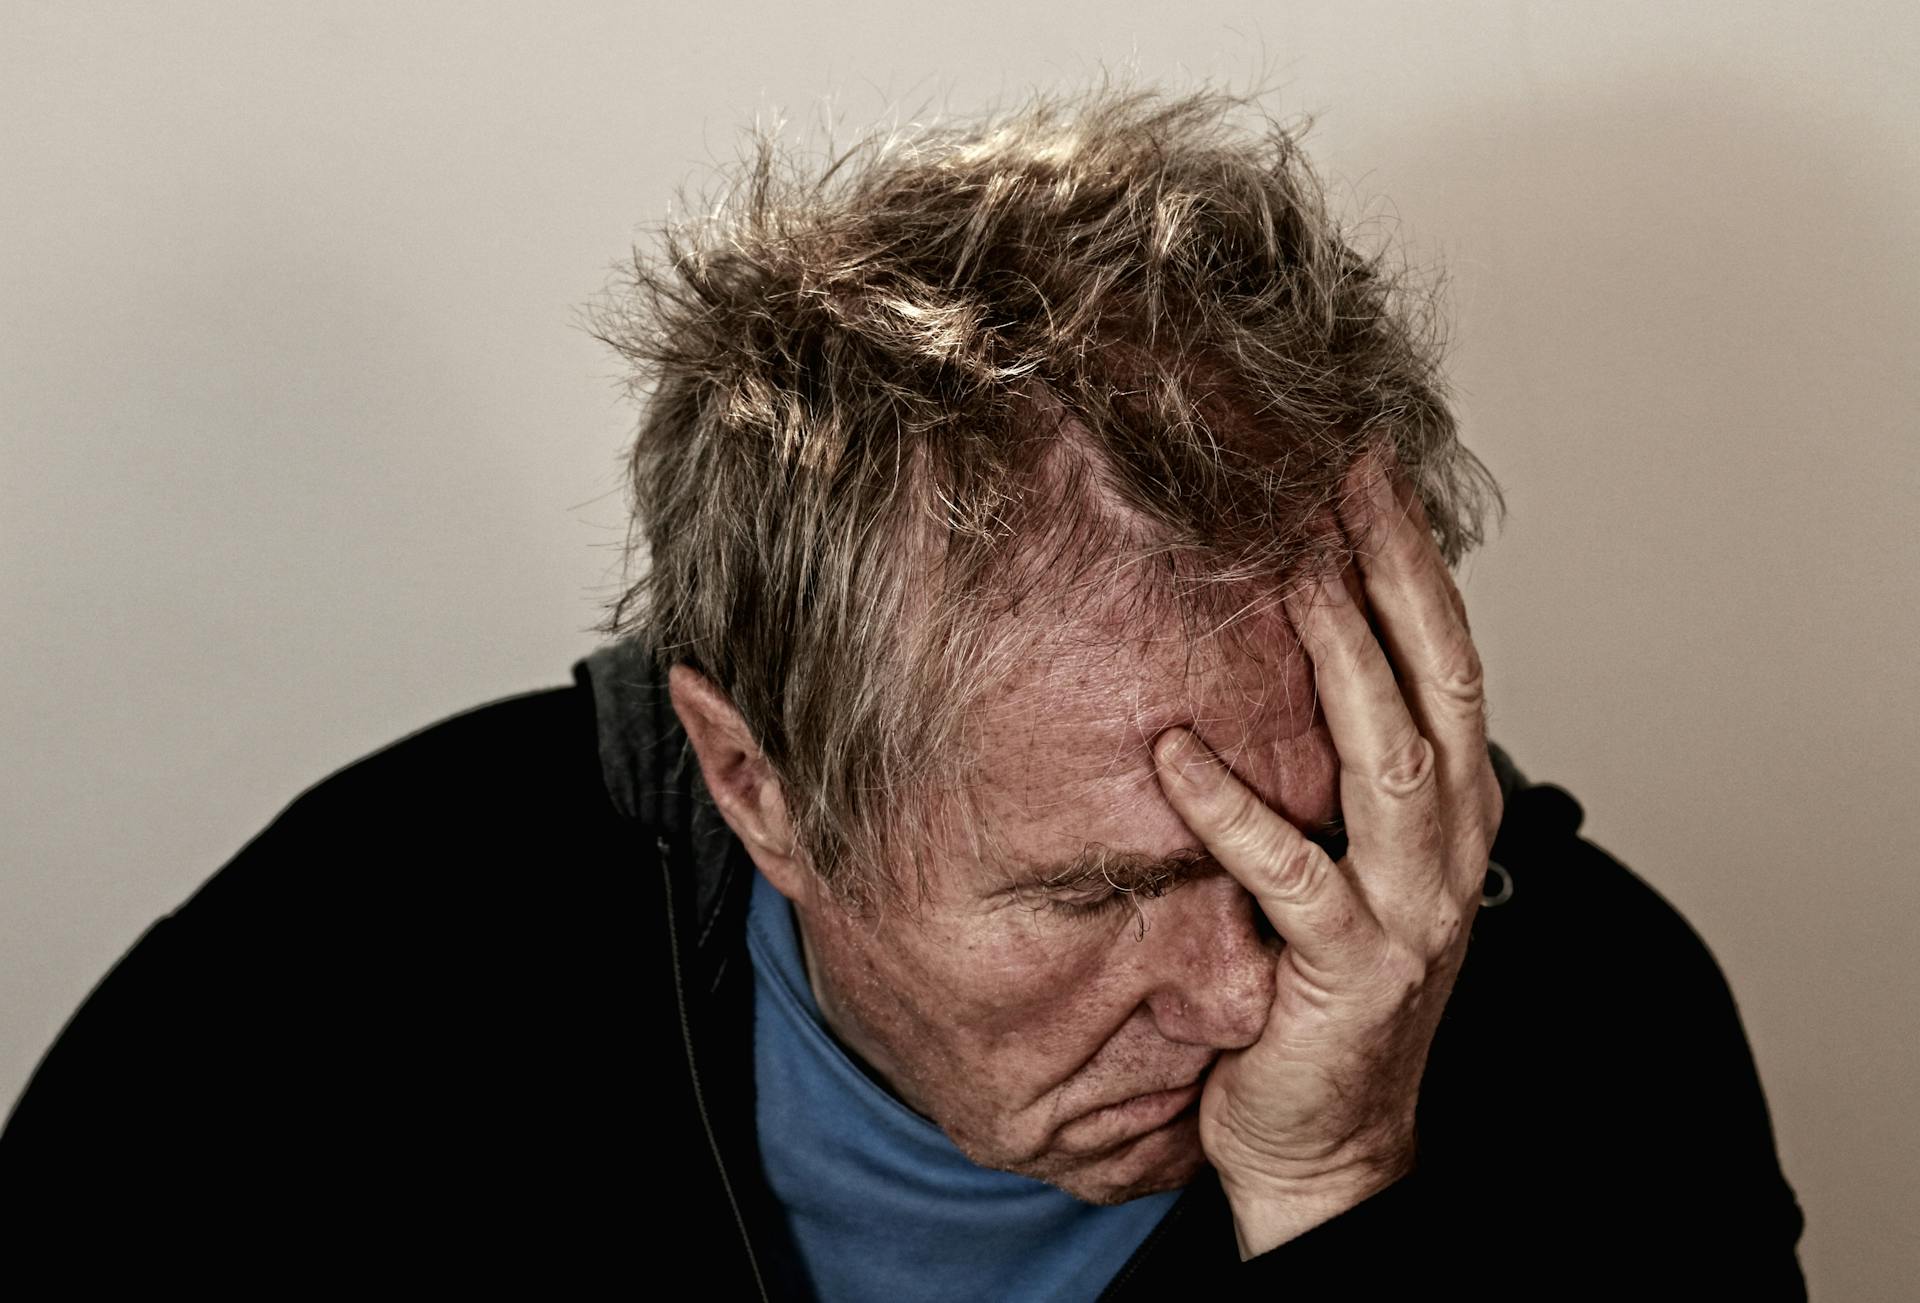 Ein deprimierter älterer Mann | Quelle: Pexels